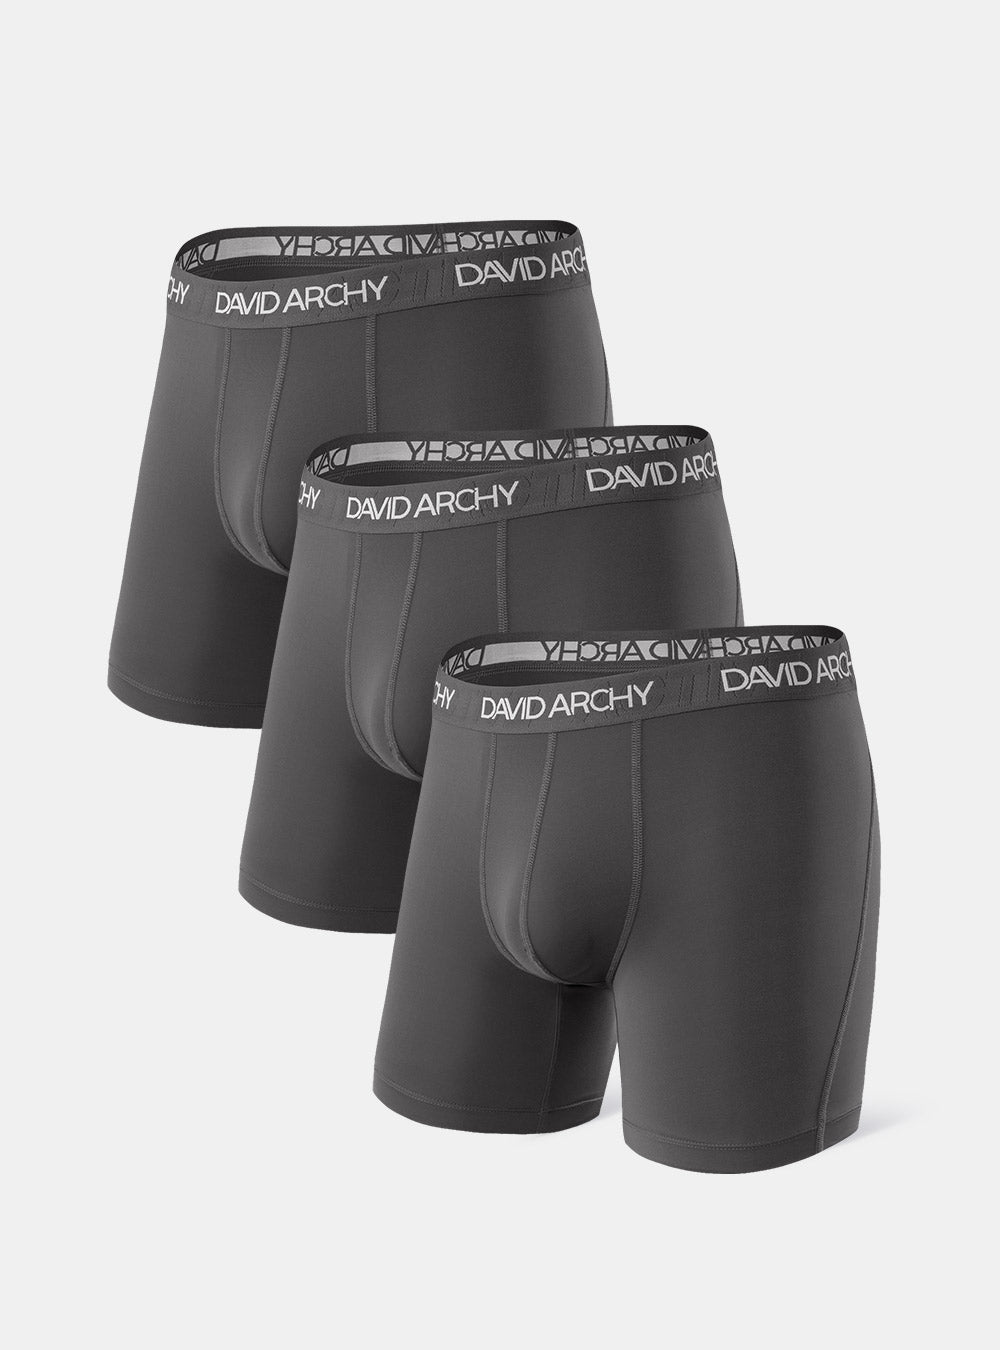 David Archy Mens Underwear Breathable Boxer Briefs Bamboo Rayon